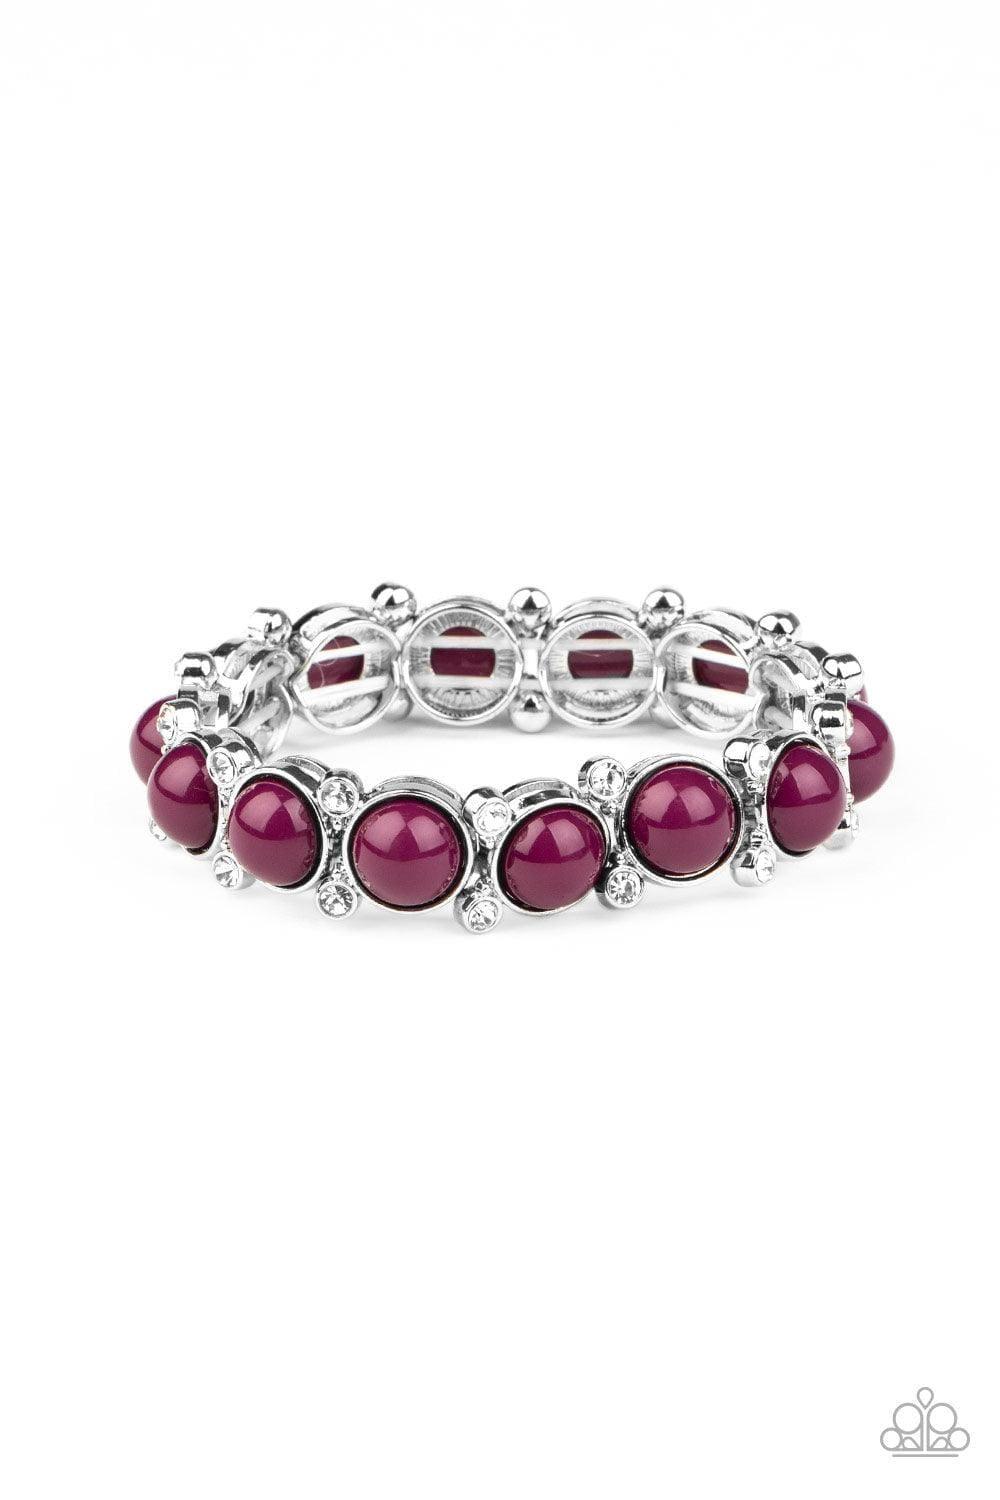 Paparazzi Accessories - Flamboyantly Fruity - Purple Bracelet - Bling by JessieK